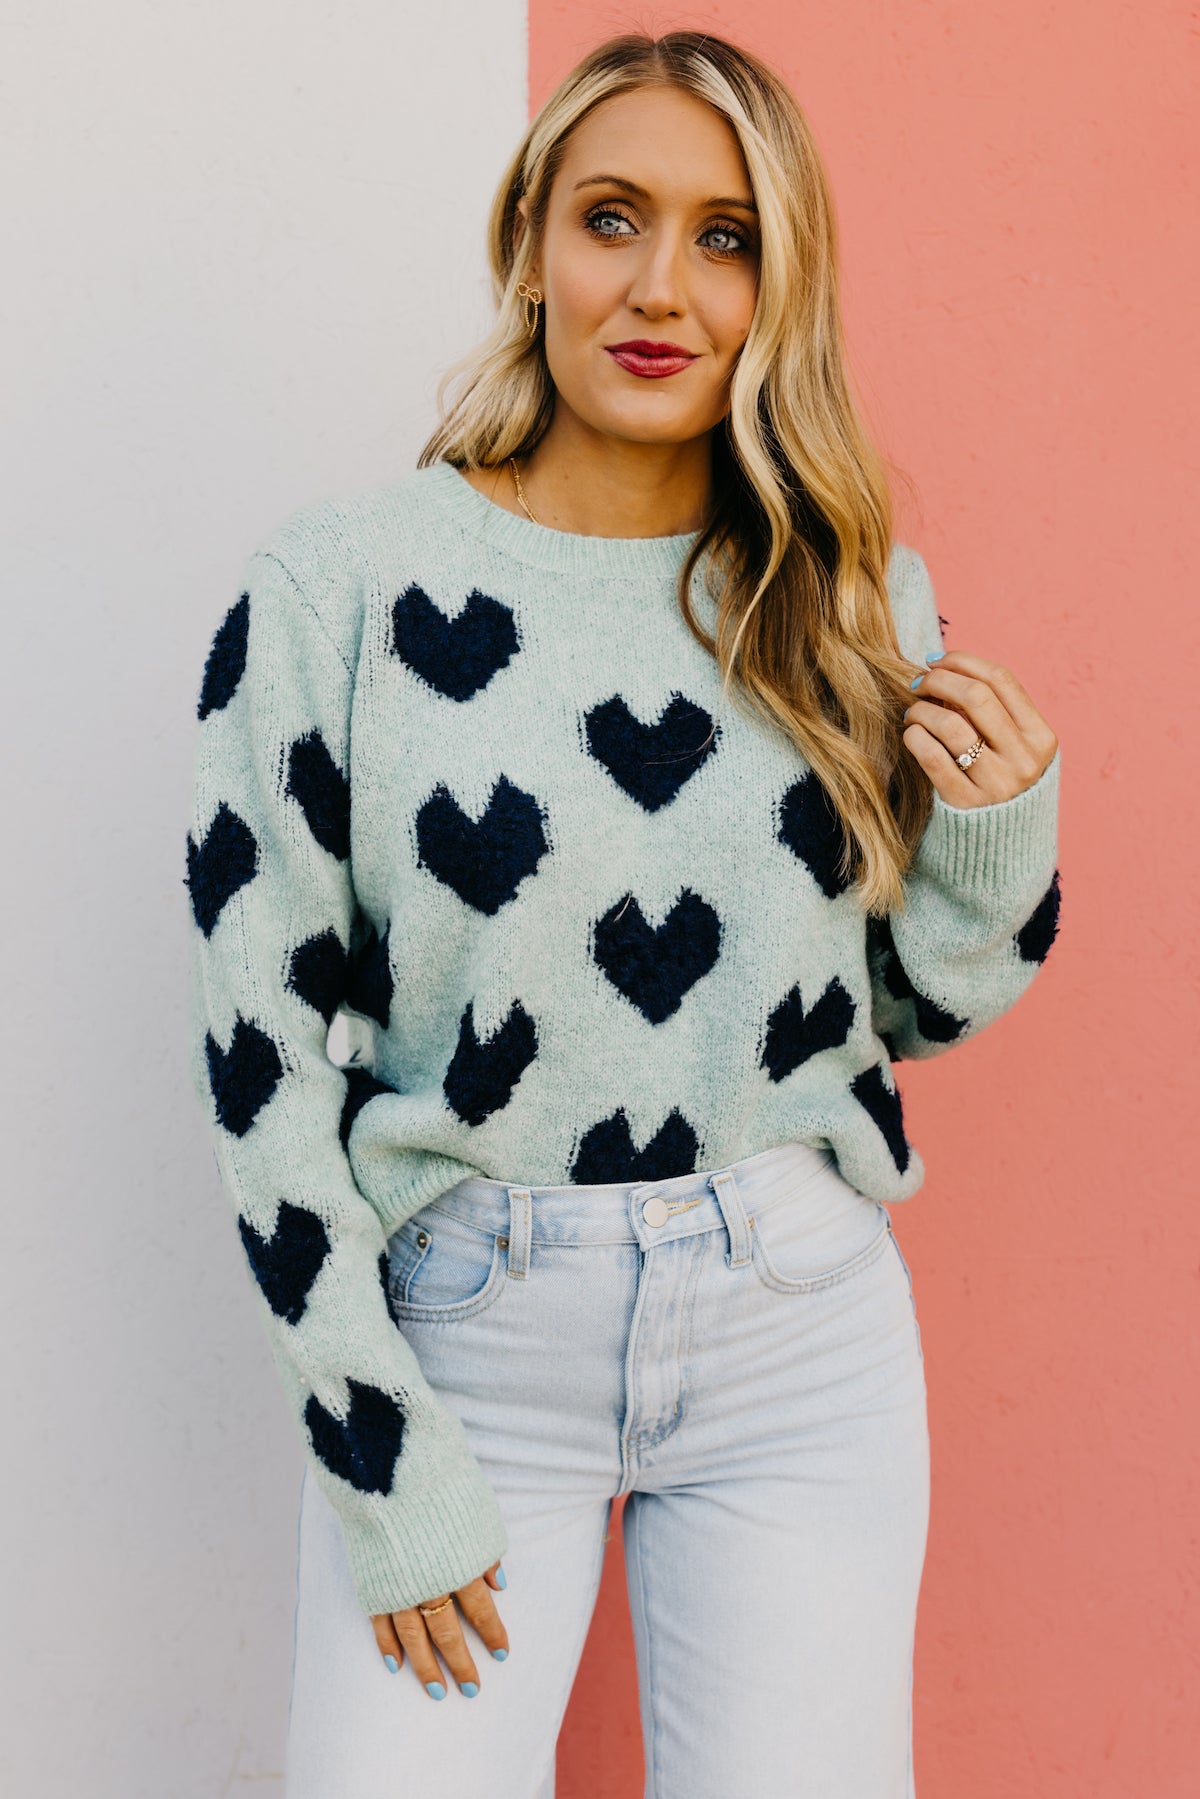 The Yosef Heart Pattern Sweater